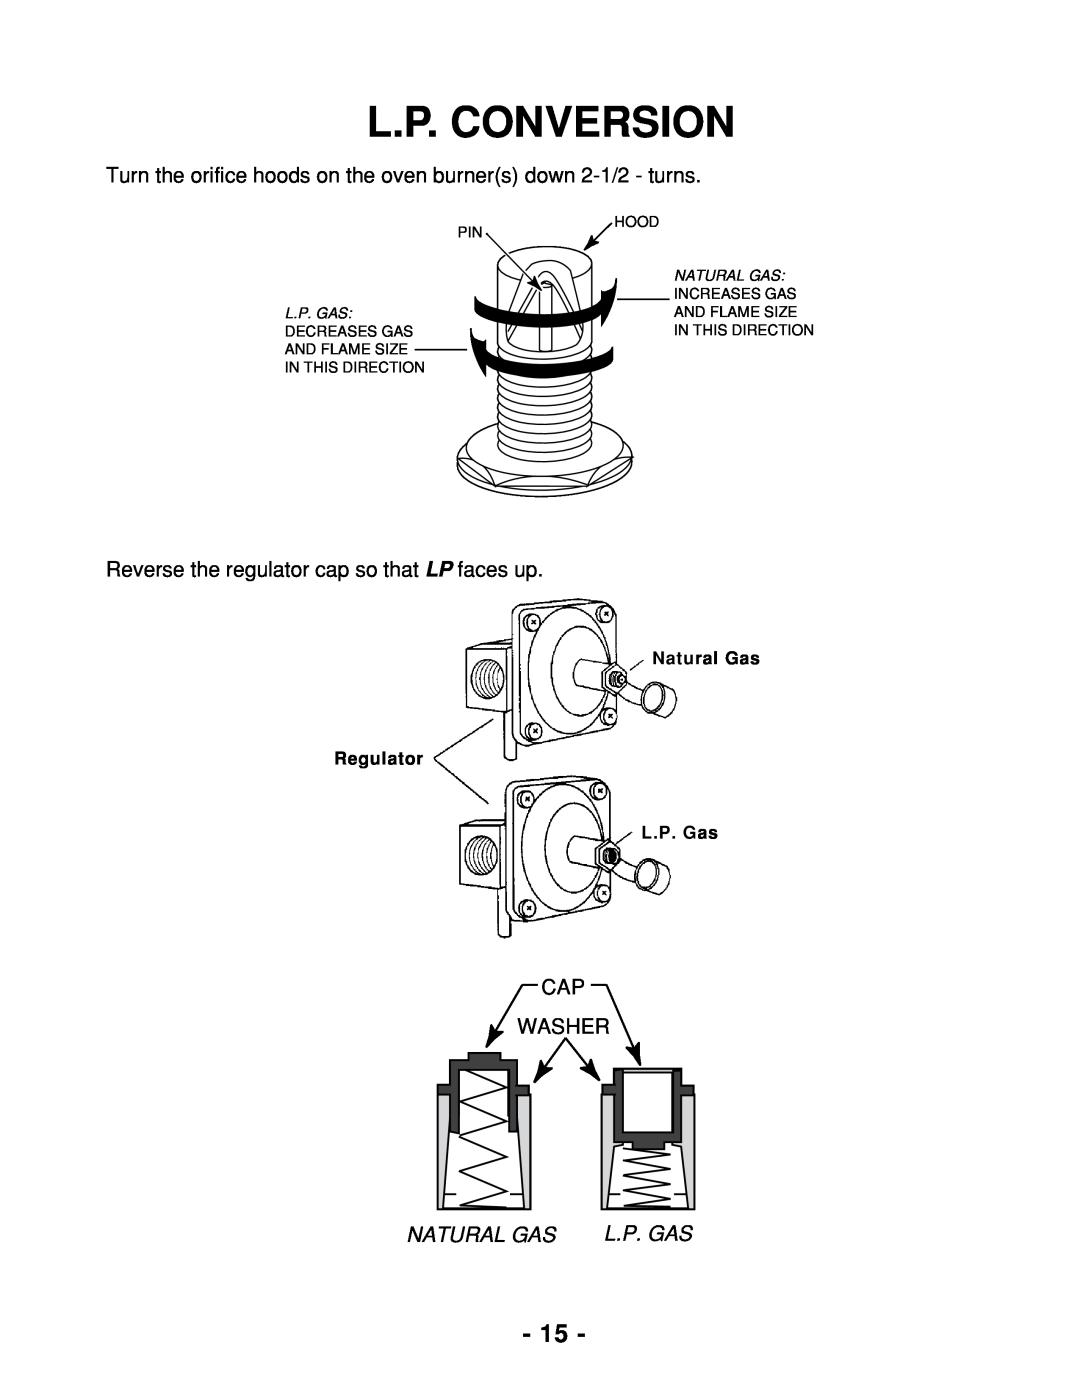 Whirlpool 465 manual L.P. Conversion, Natural Gas, L.P. Gas 